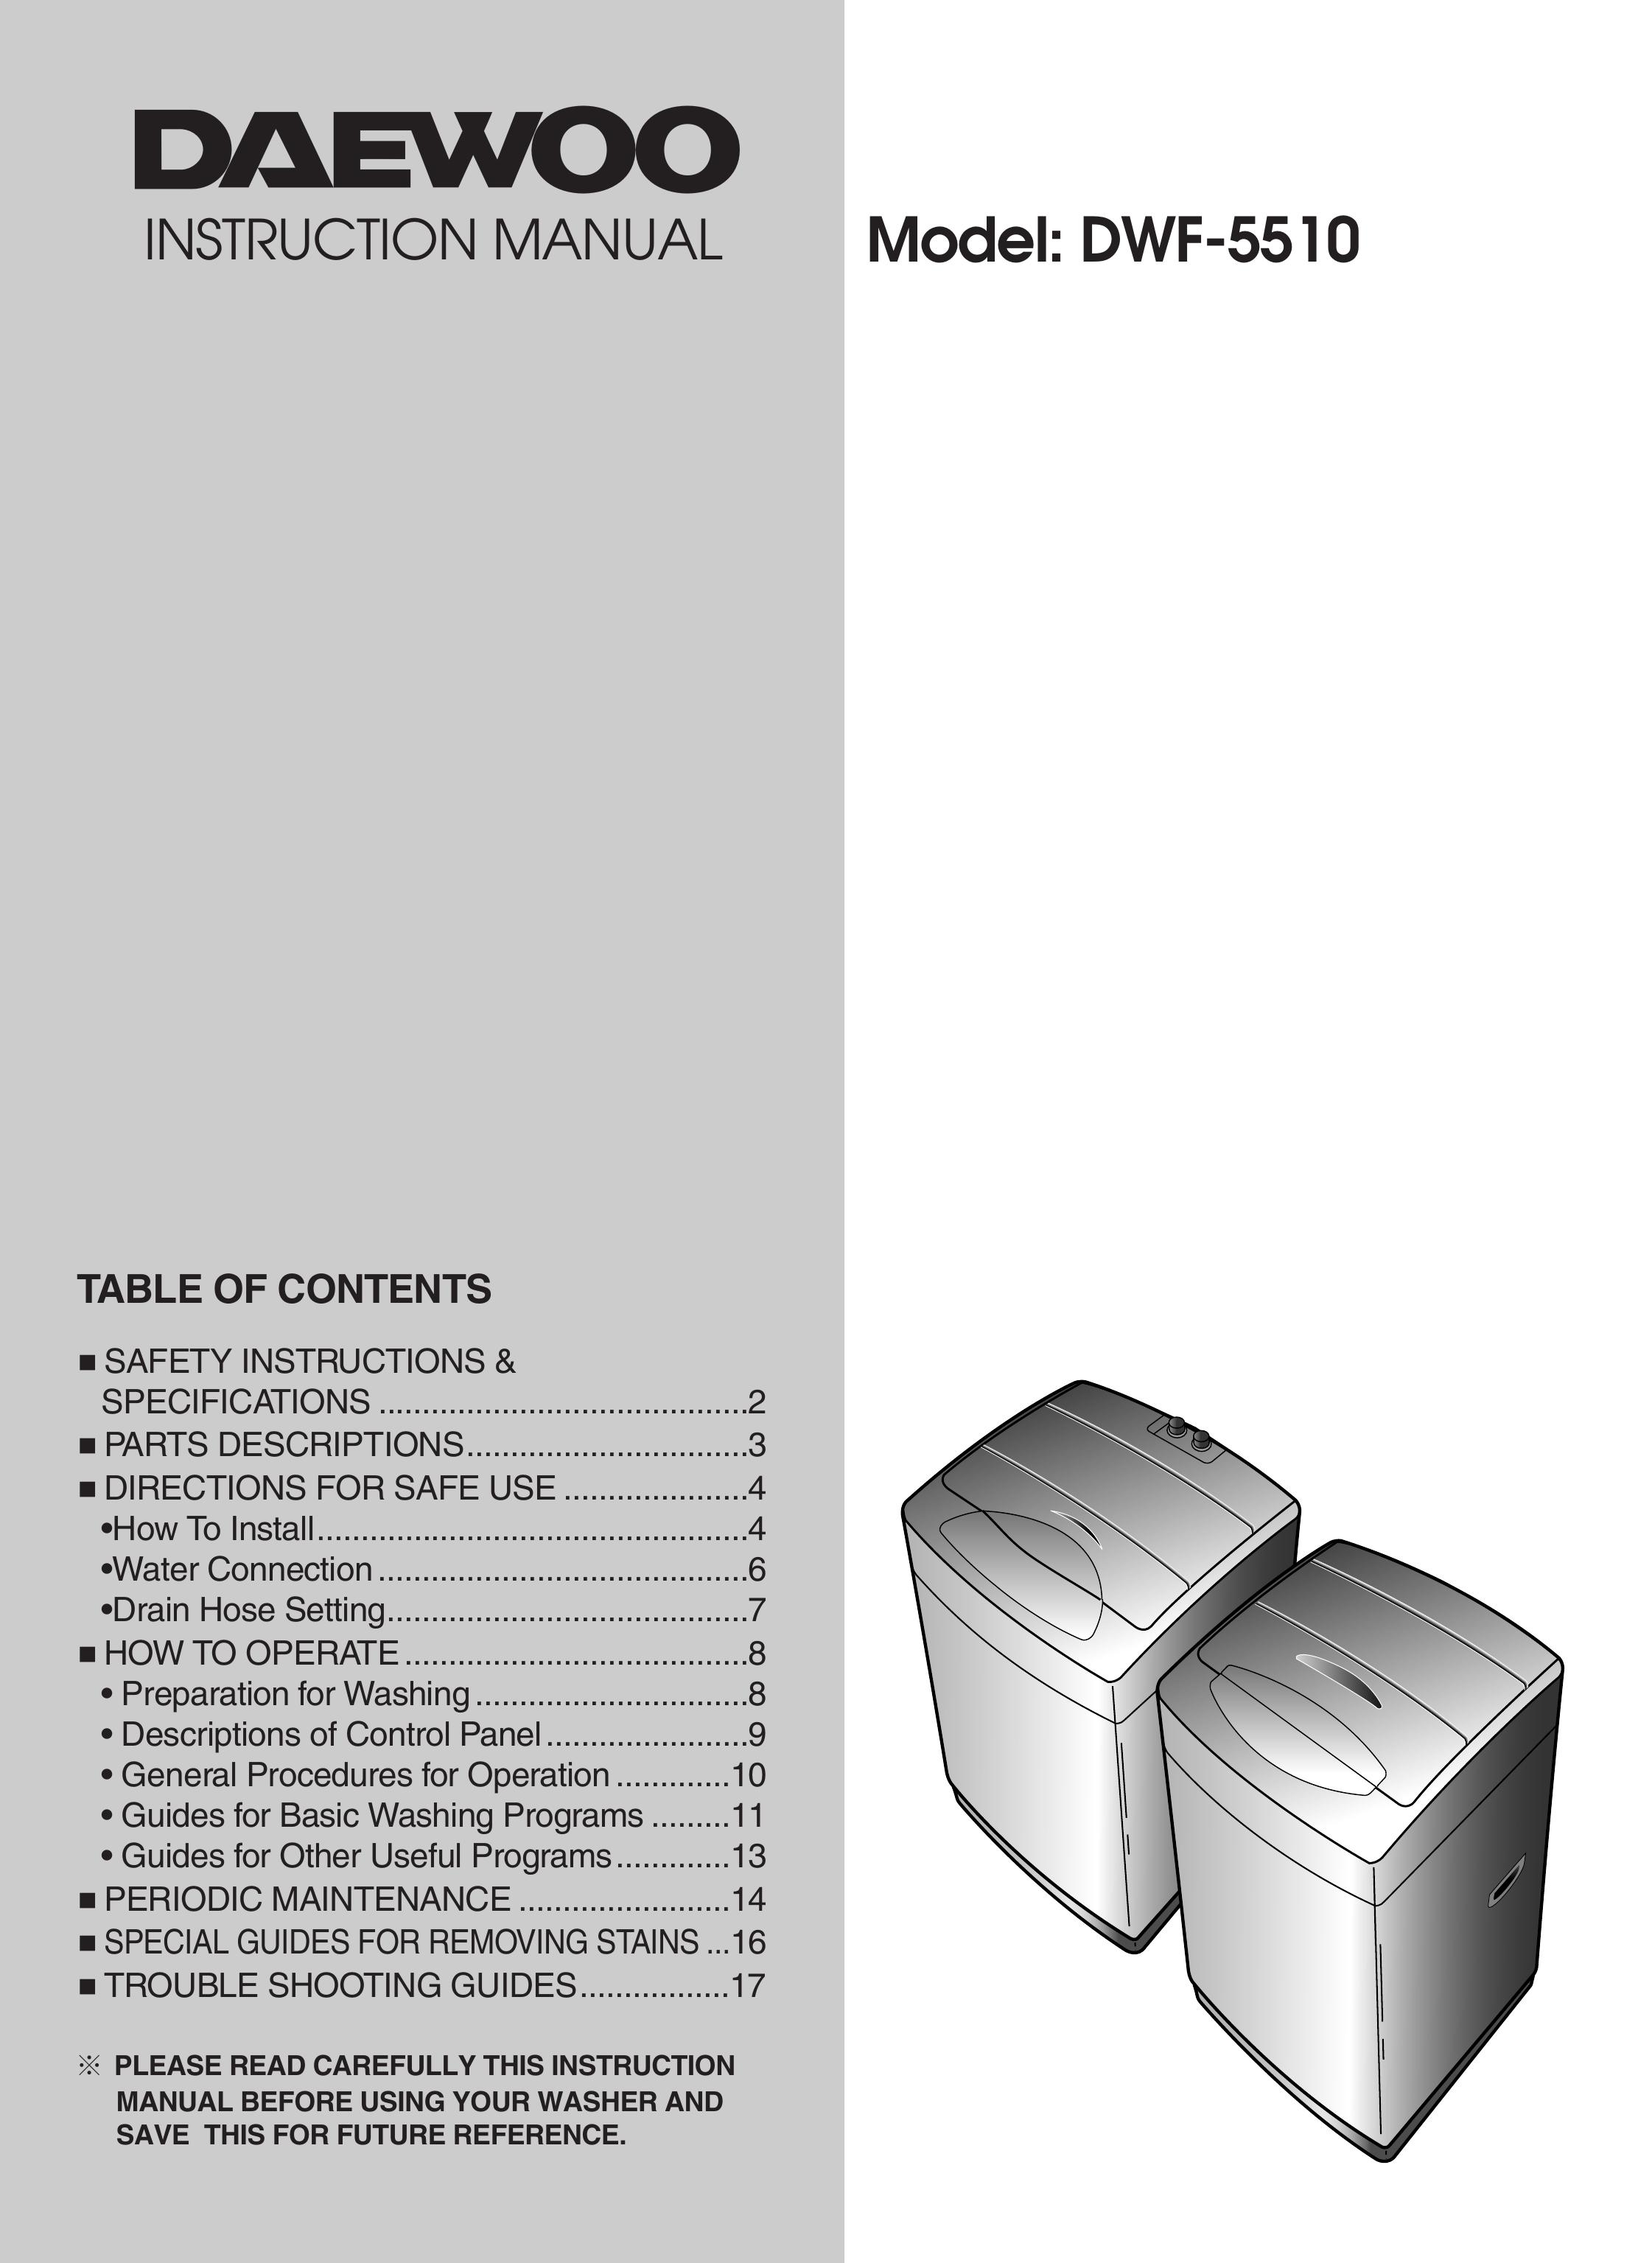 Daewoo DWF-5510 Washer User Manual